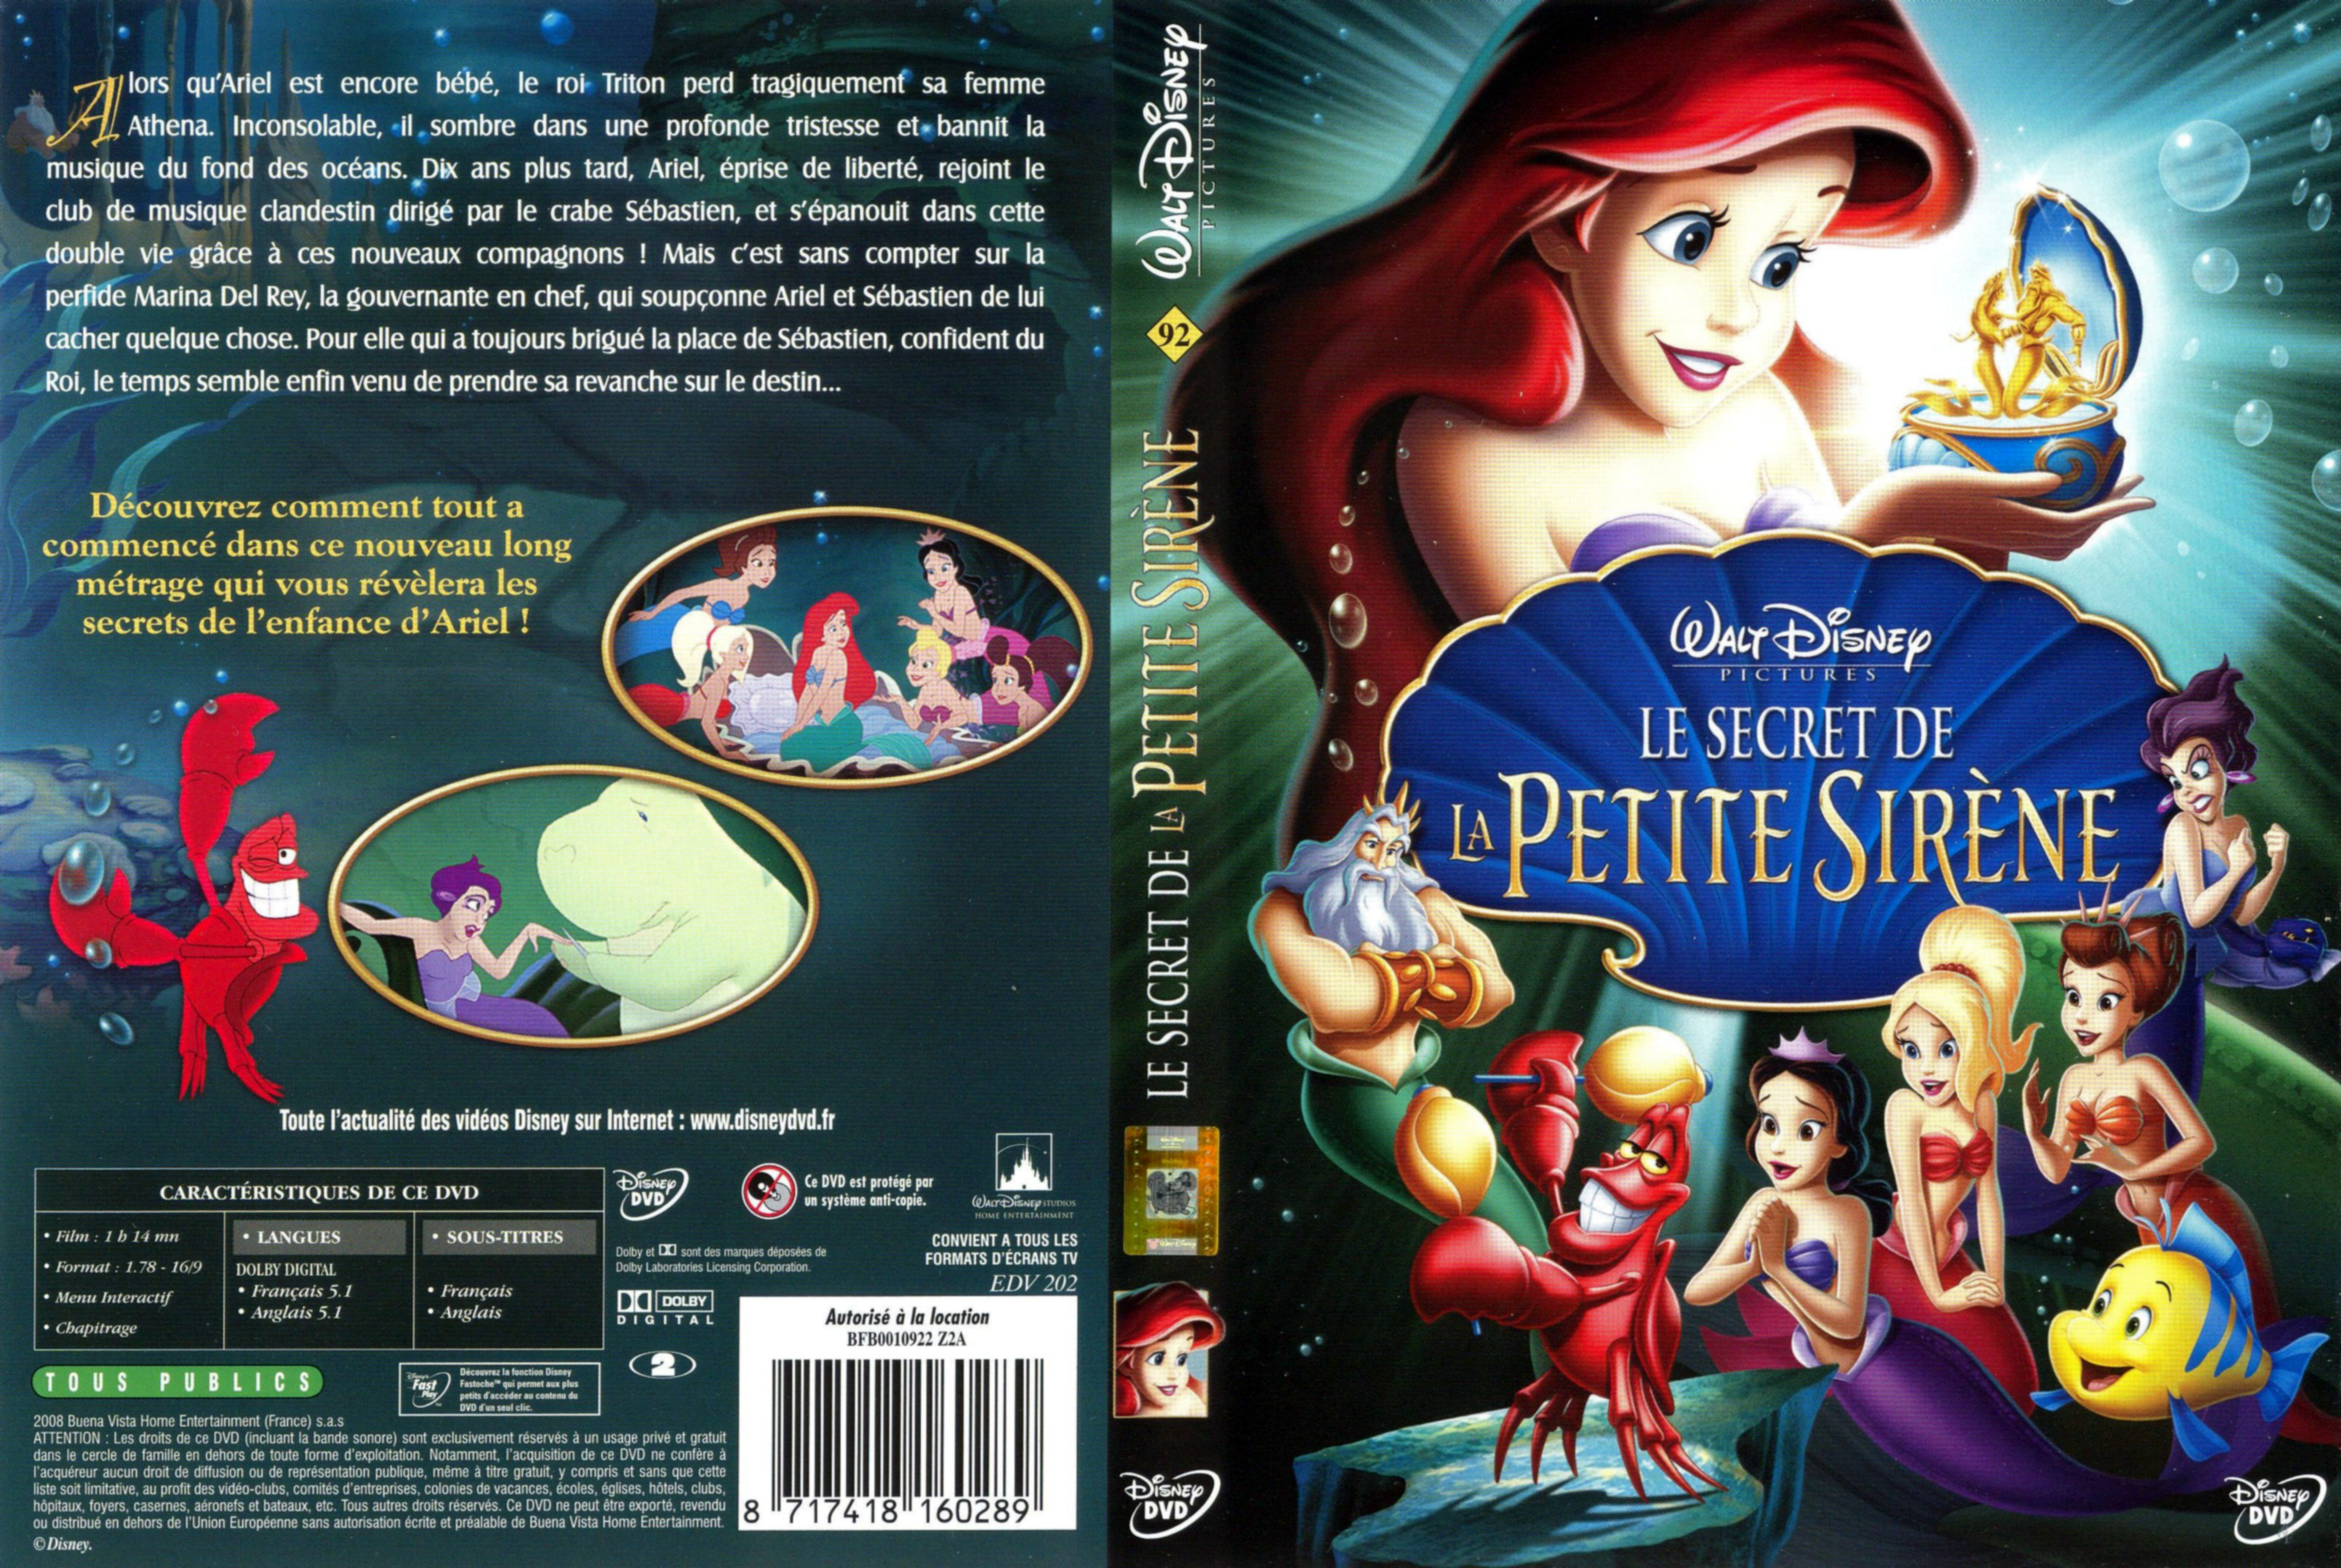 Jaquette DVD Le secret de la petite sirene